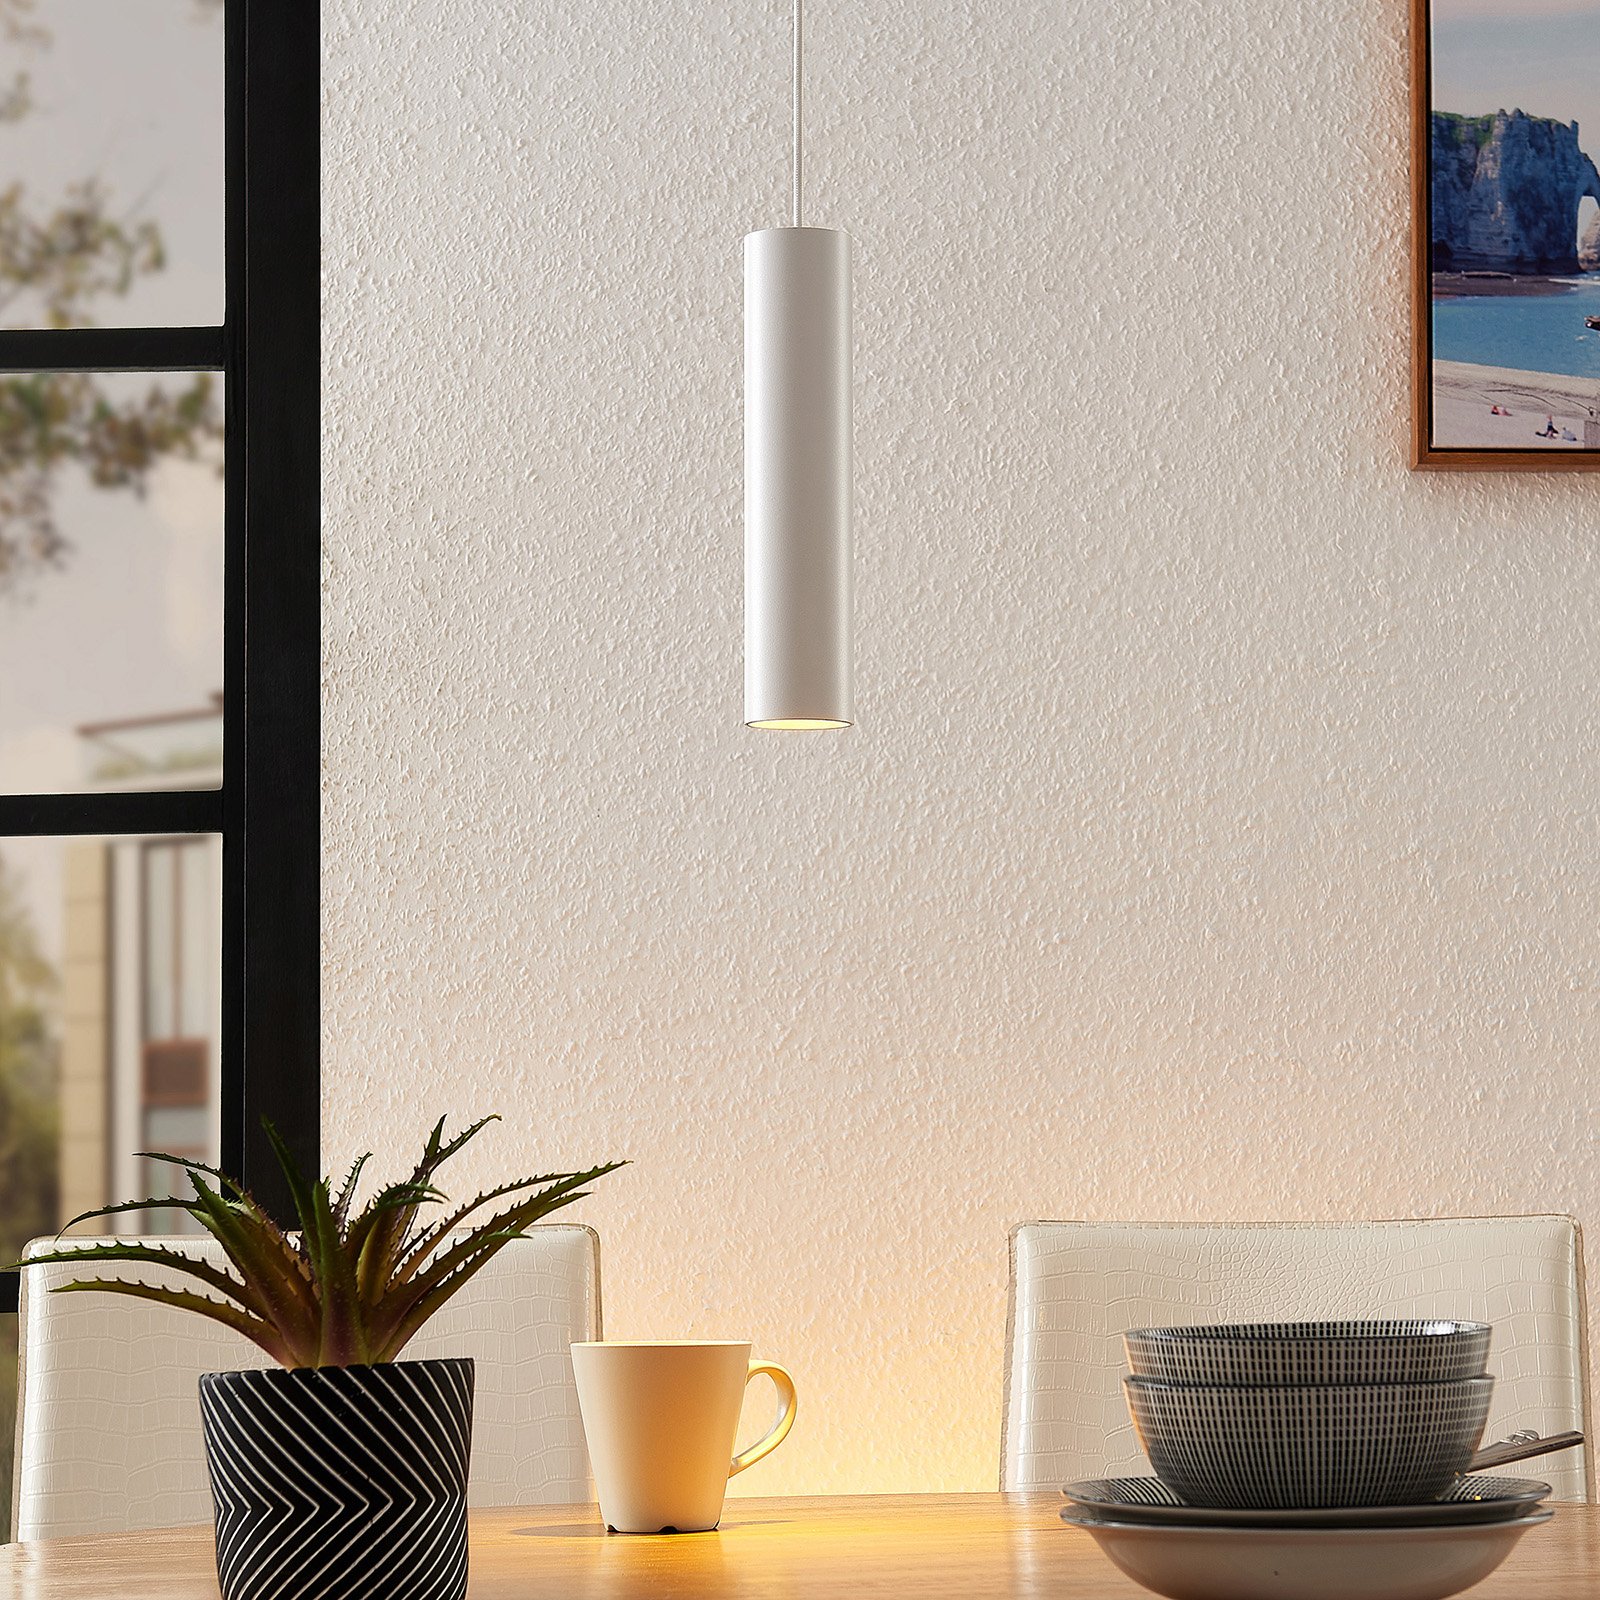 Arcchio Ejona függő lámpa, 27 cm magas, fehér